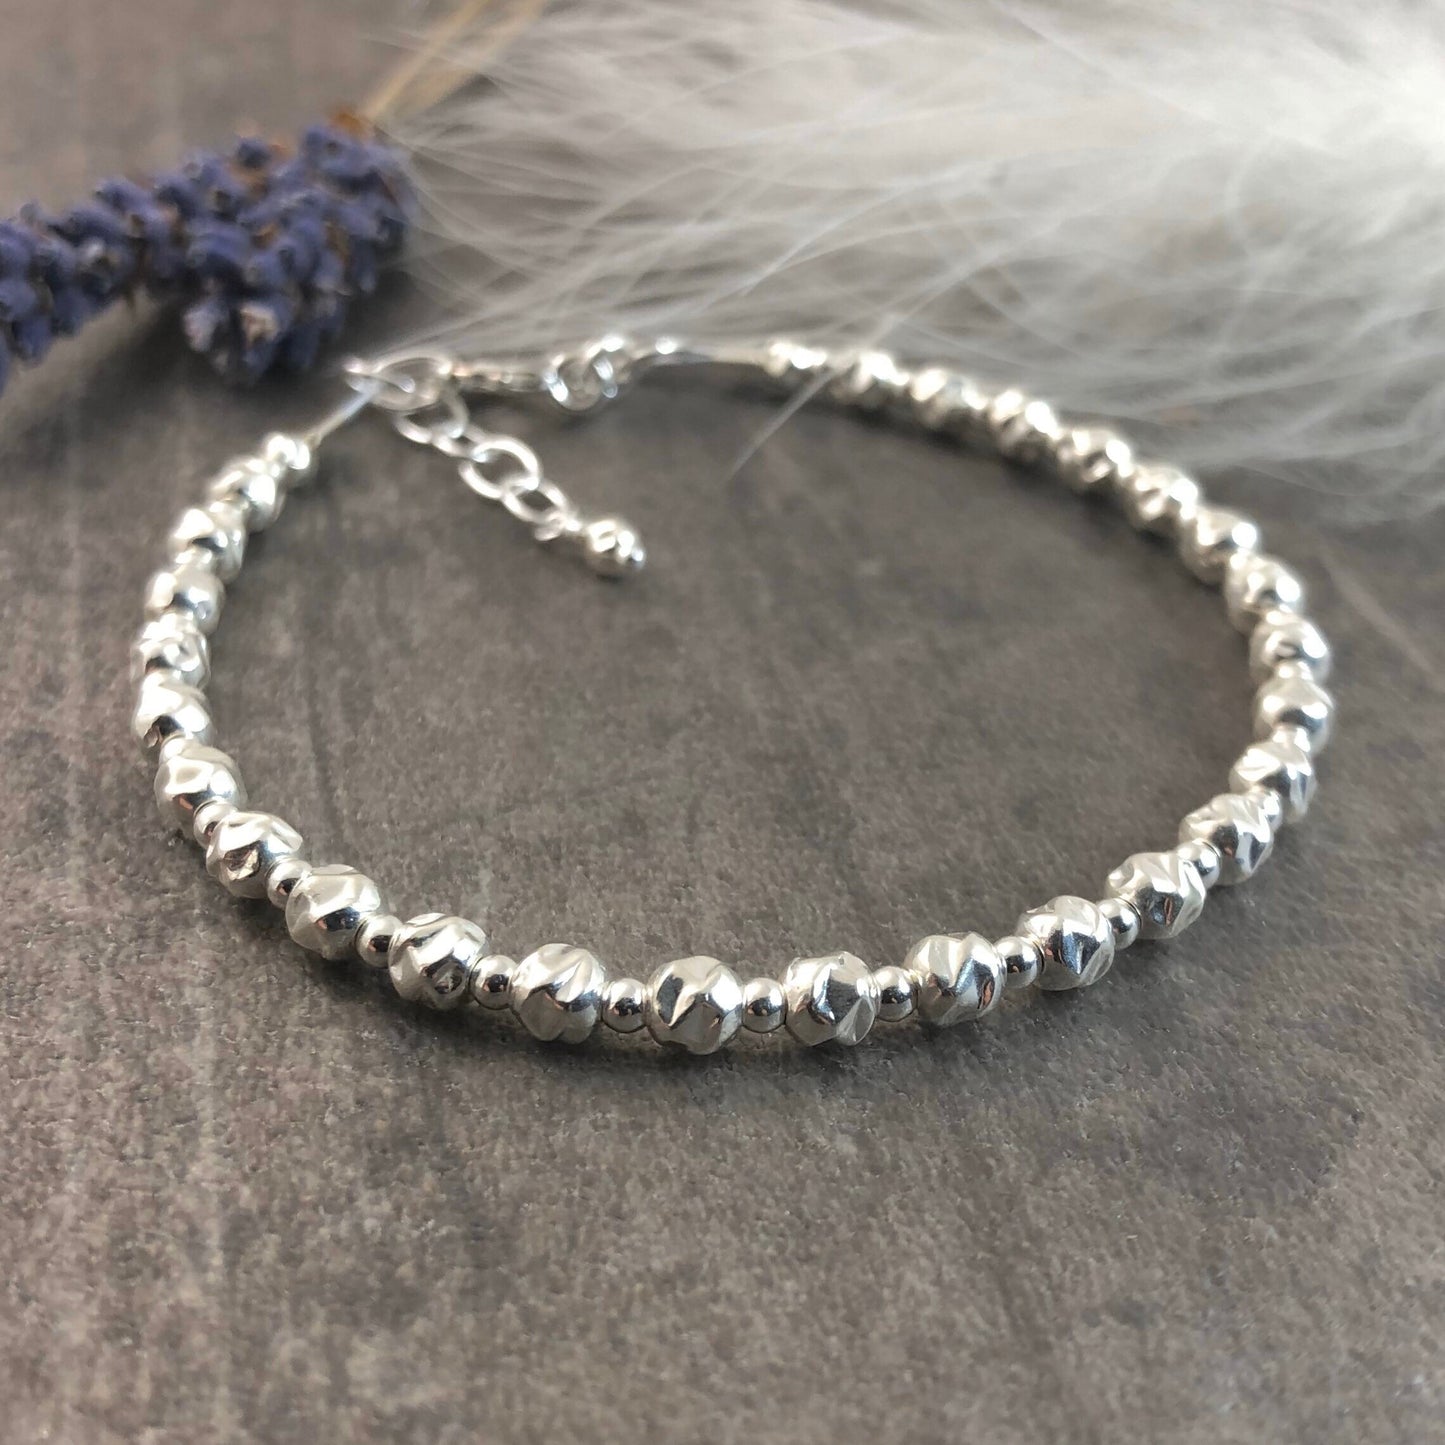 Textured Sterling Silver Bracelet, 4mm bead bracelet